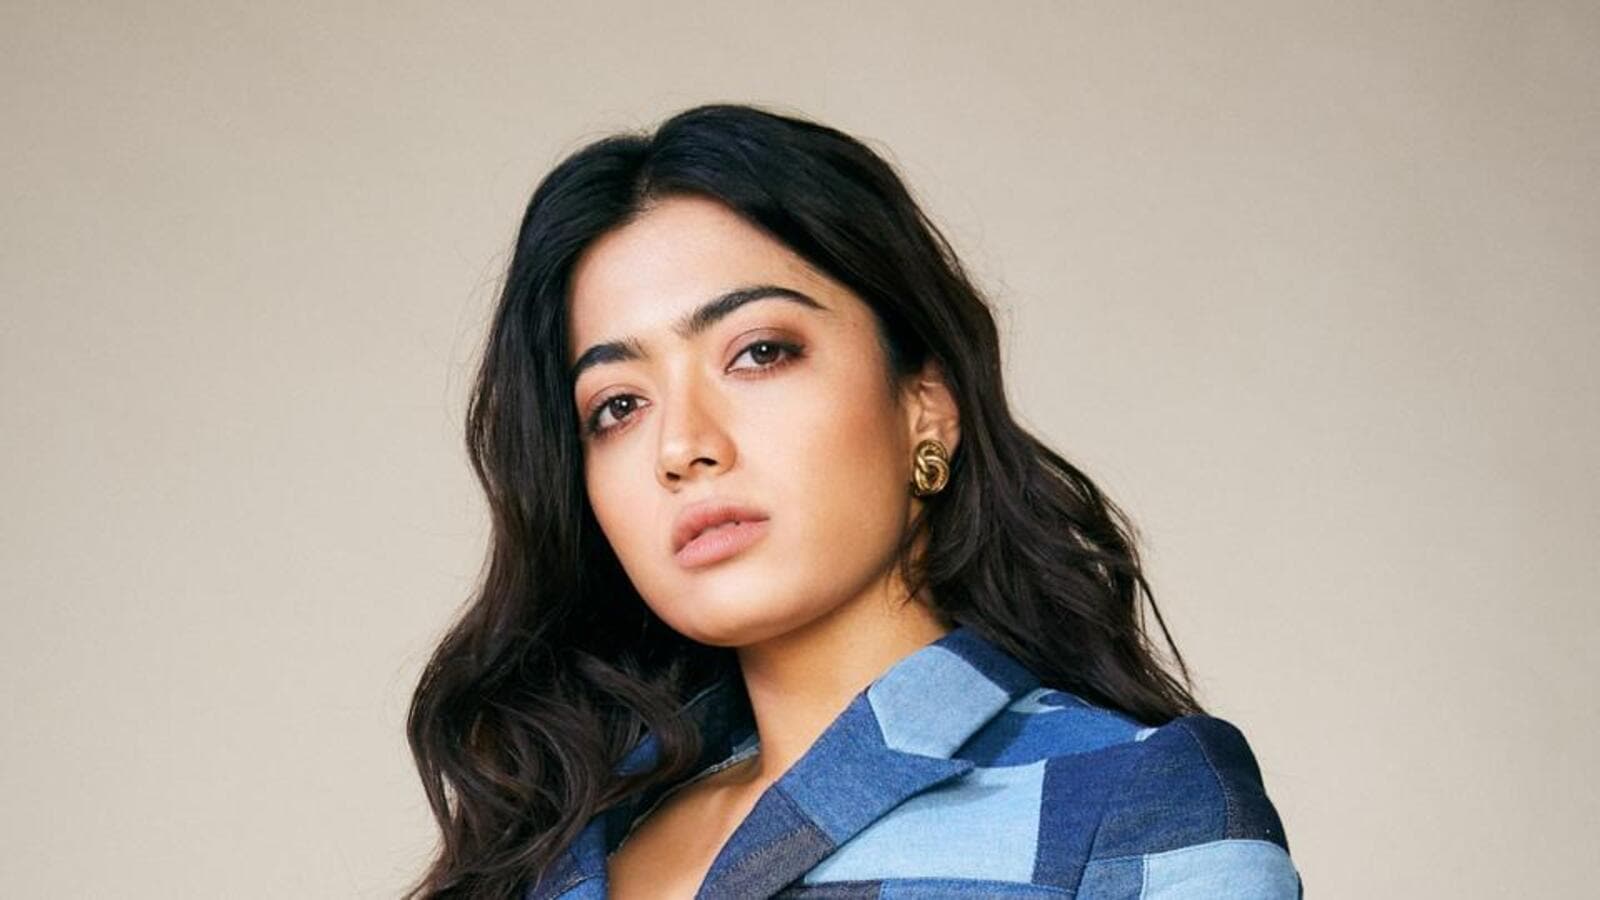 Rashmeka Sex - Rashmika Mandanna on Bollywood debut: Feels motivating to grab eyeballs  even before my work is out | Bollywood - Hindustan Times